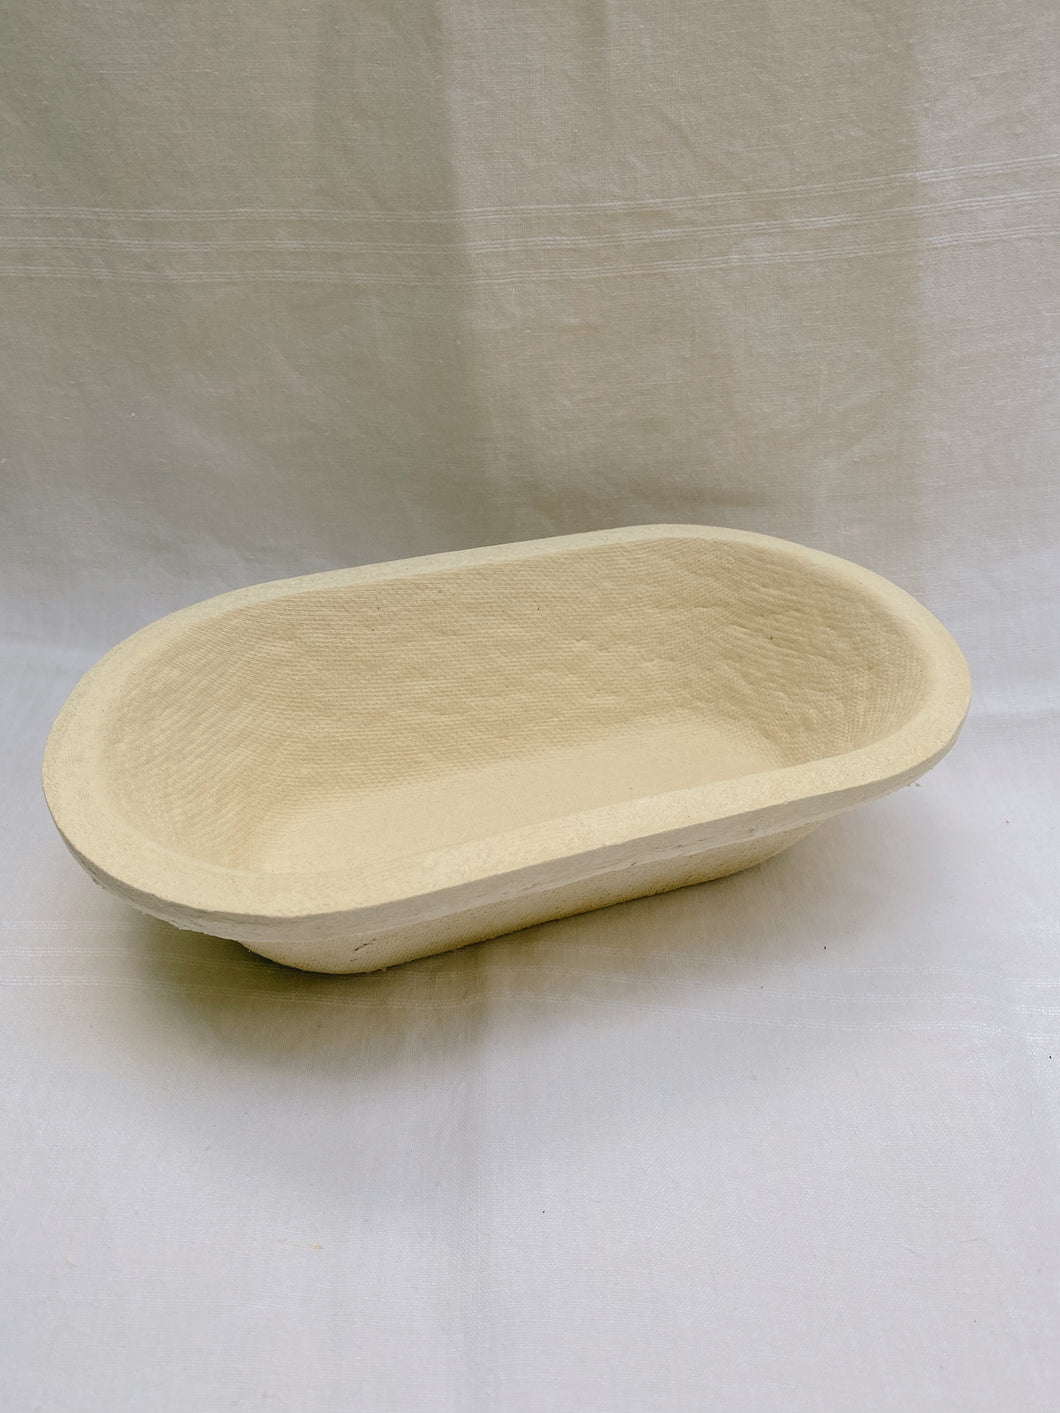 Long Plain Oval Proving Banneton Basket 500g - Upper Internal Dimensions 23cm x 12cm (compressed wood pulp)